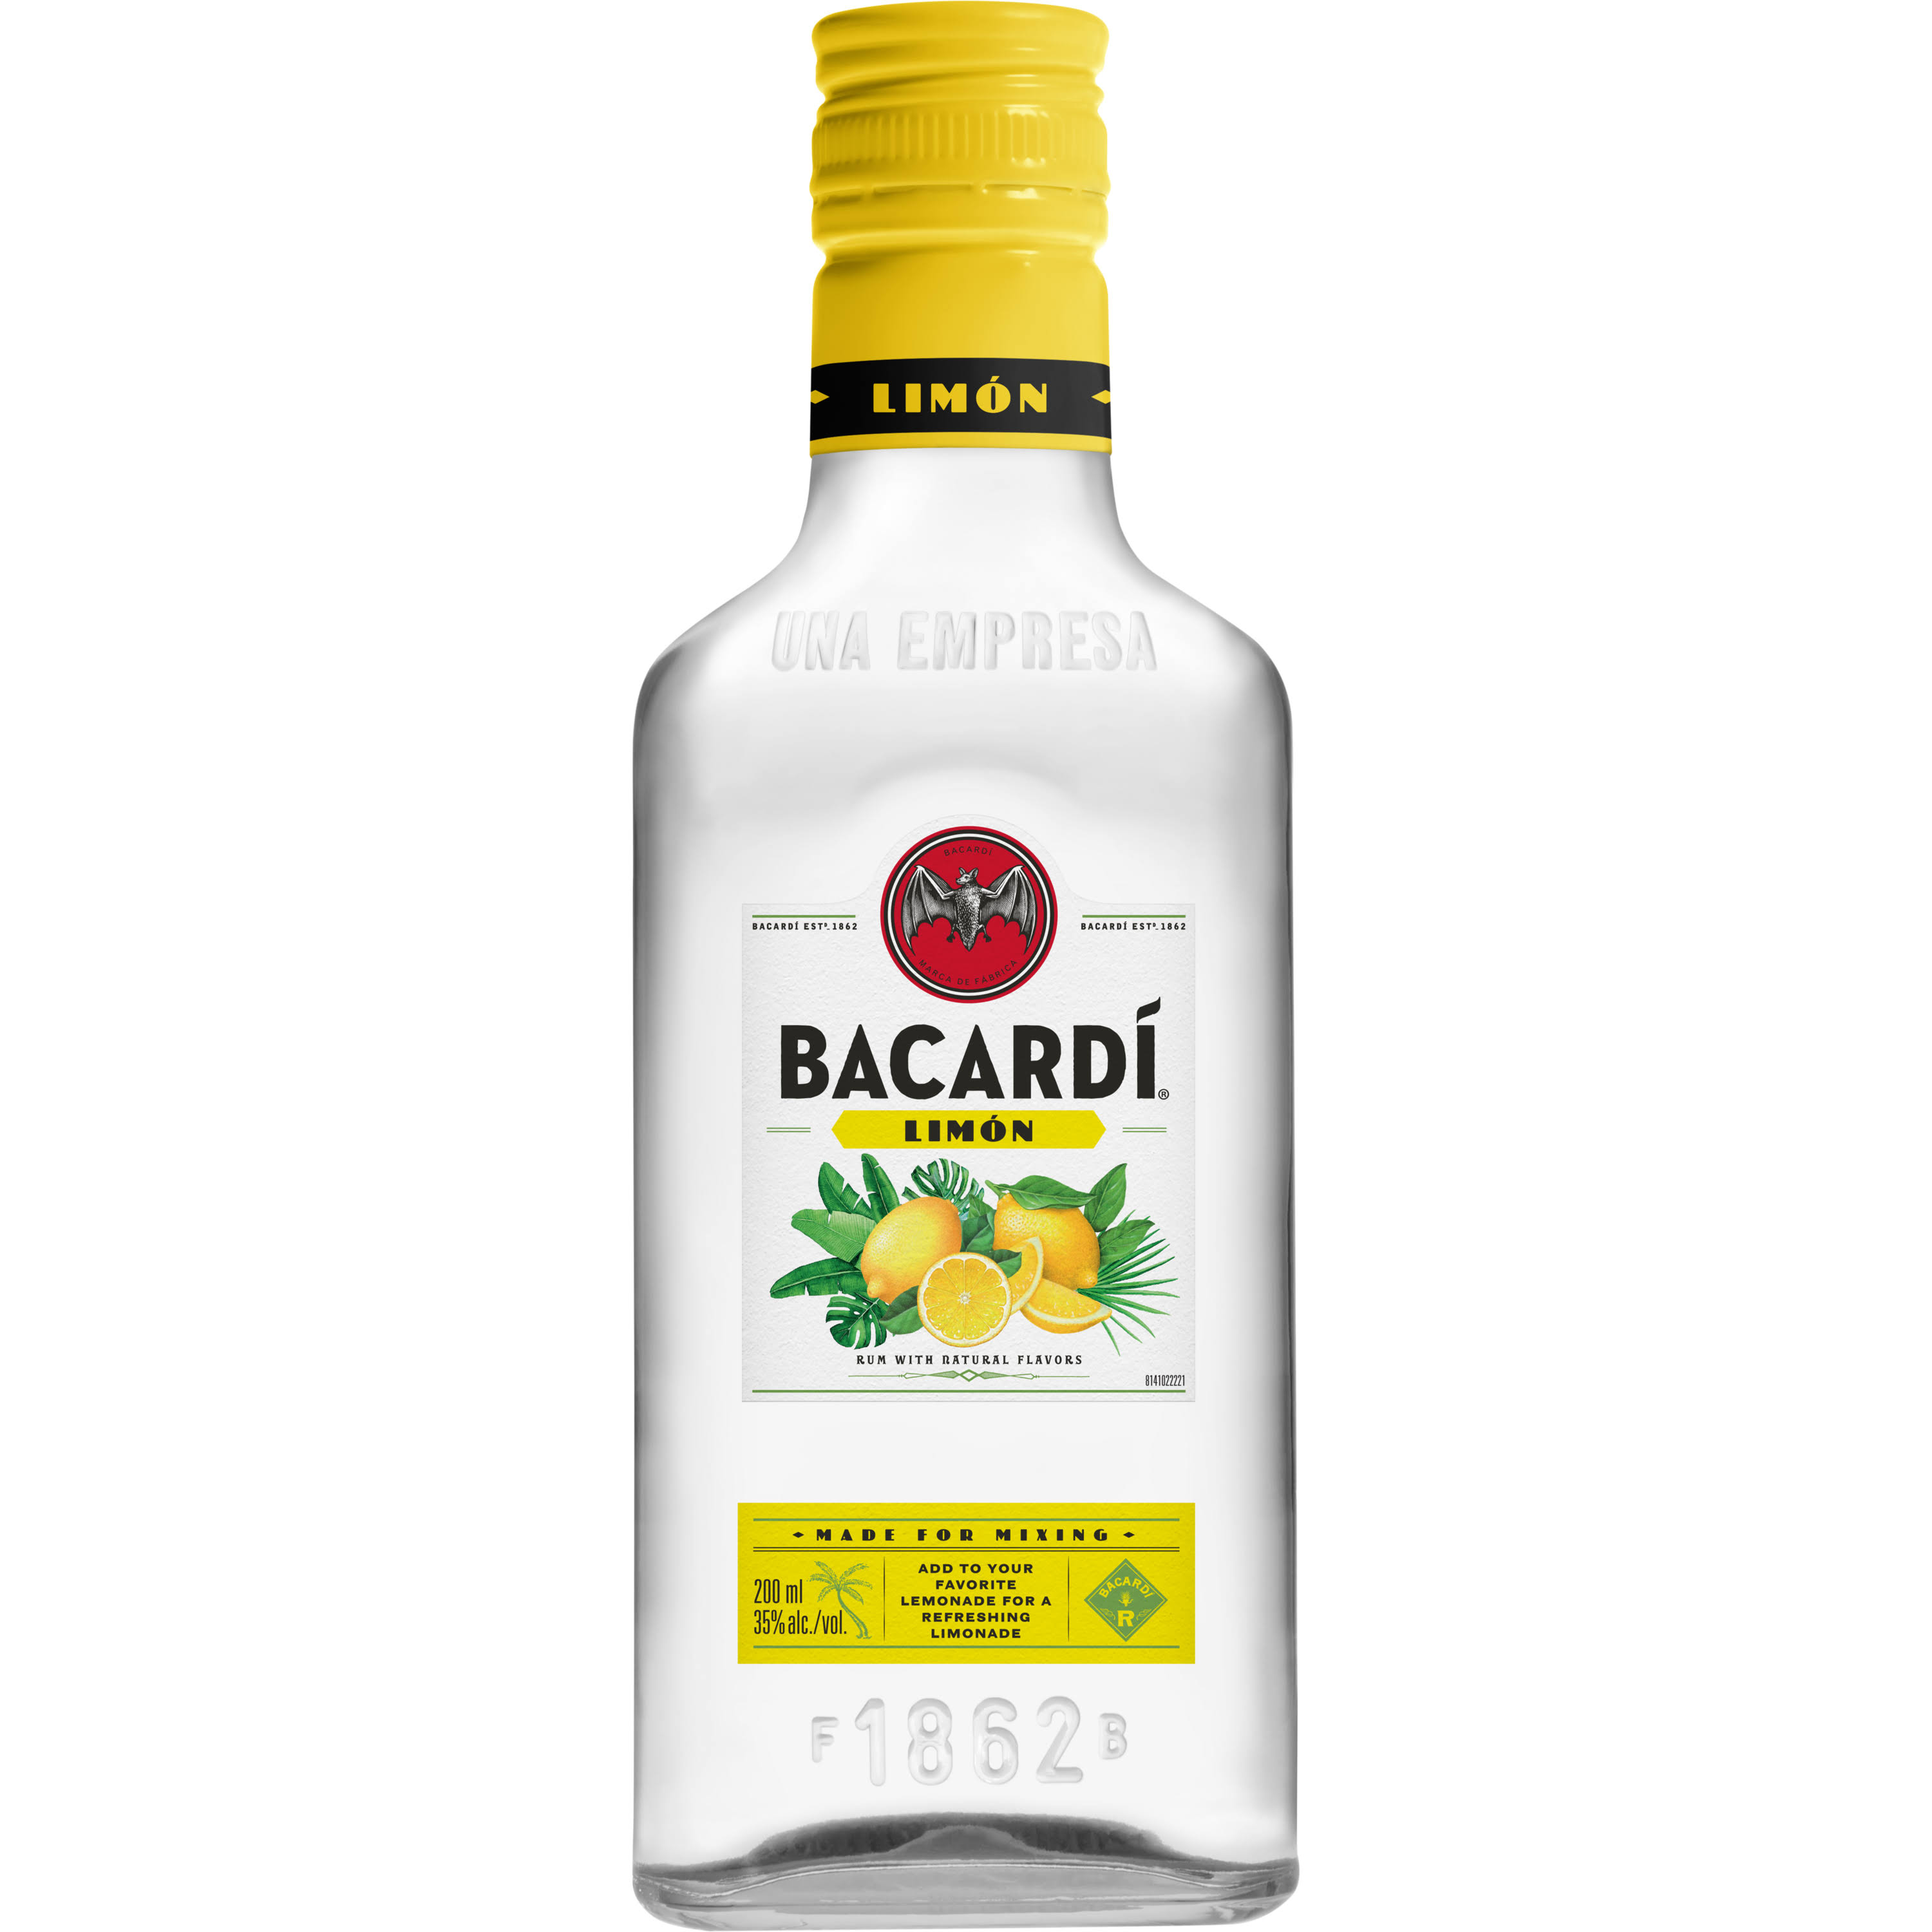 Bacardi Limon Rum 200ml